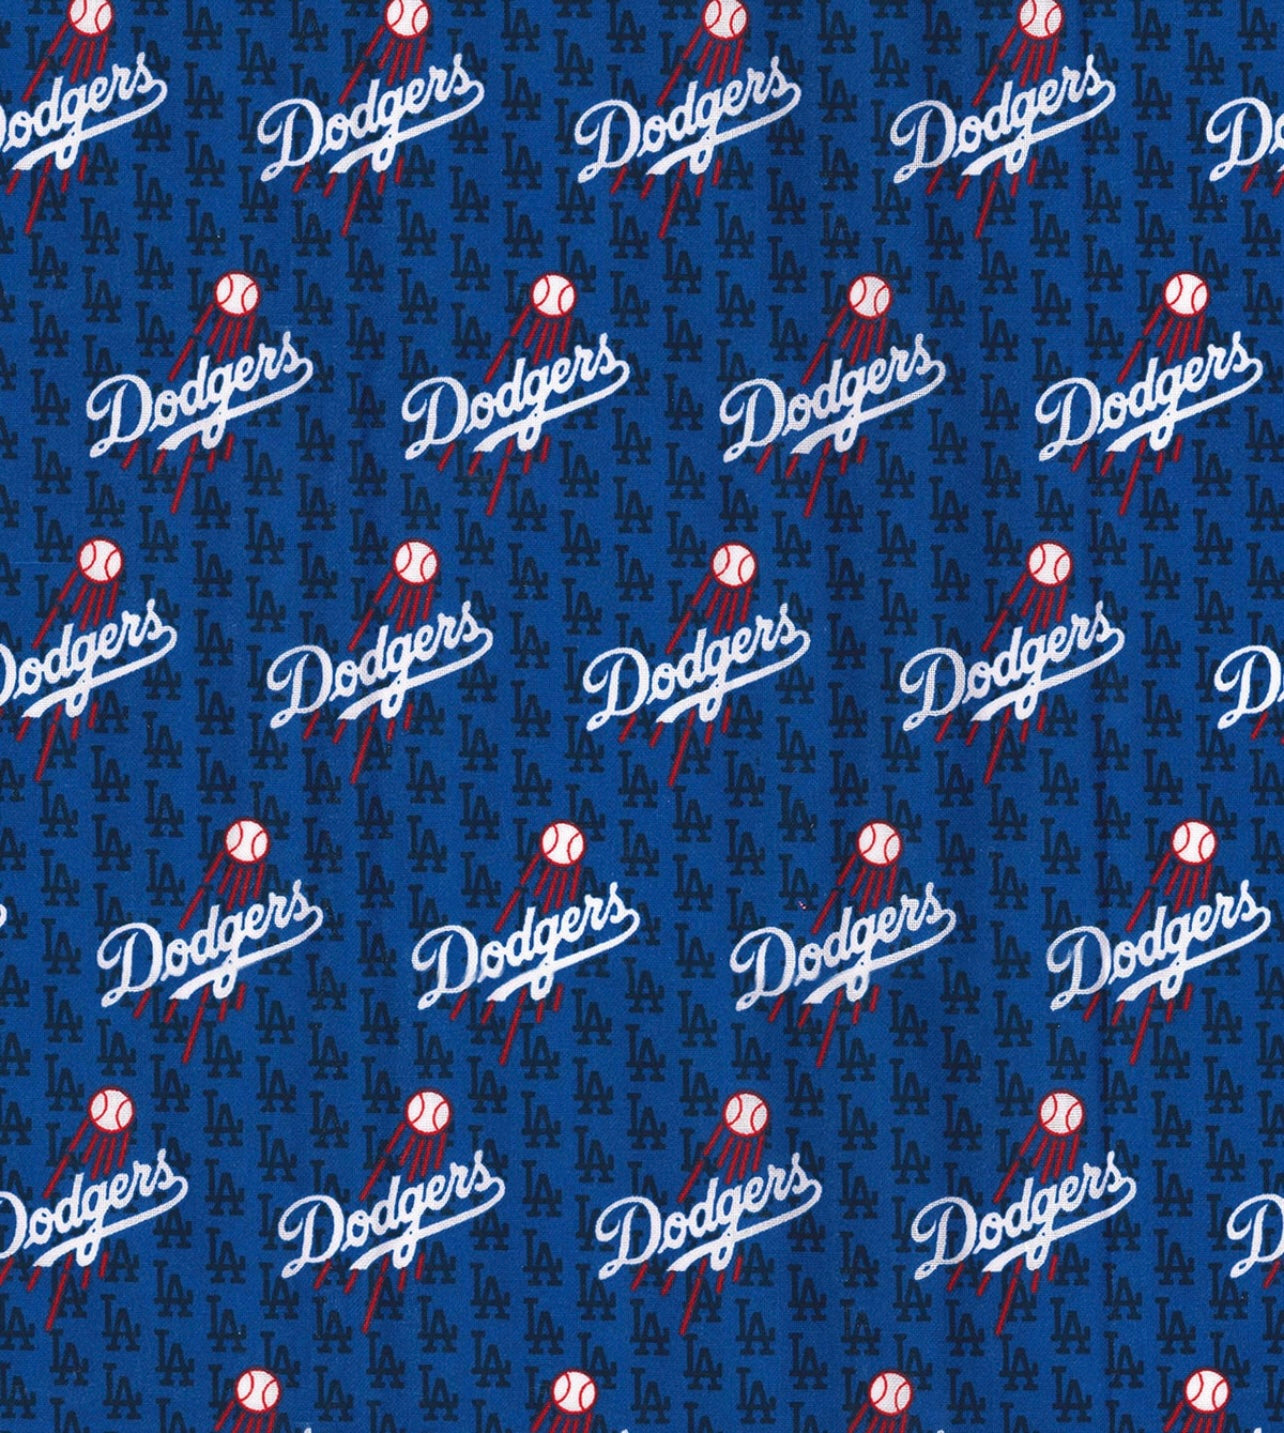 Custom Made Jeff Cap Handmade in Los Angeles Dodgers Logo Print Fabric